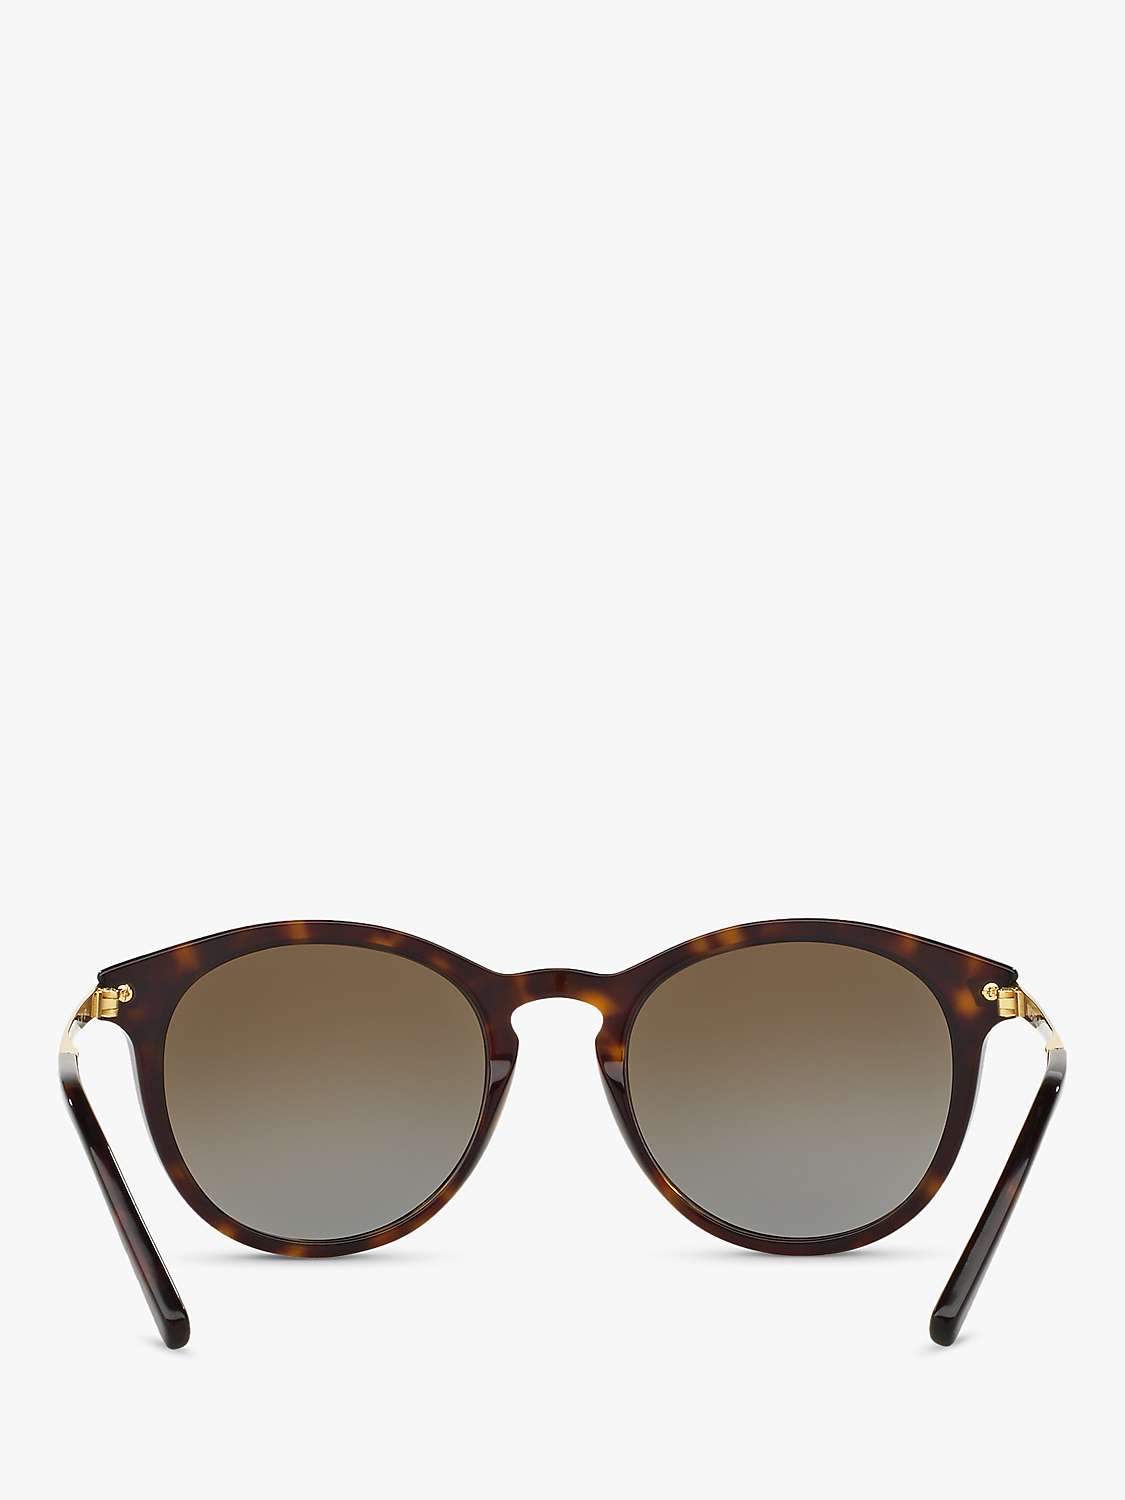 Buy Michael Kors MK2023 Women's Polarised Round Sunglasses, Tortoise/Brown Gradient Online at johnlewis.com